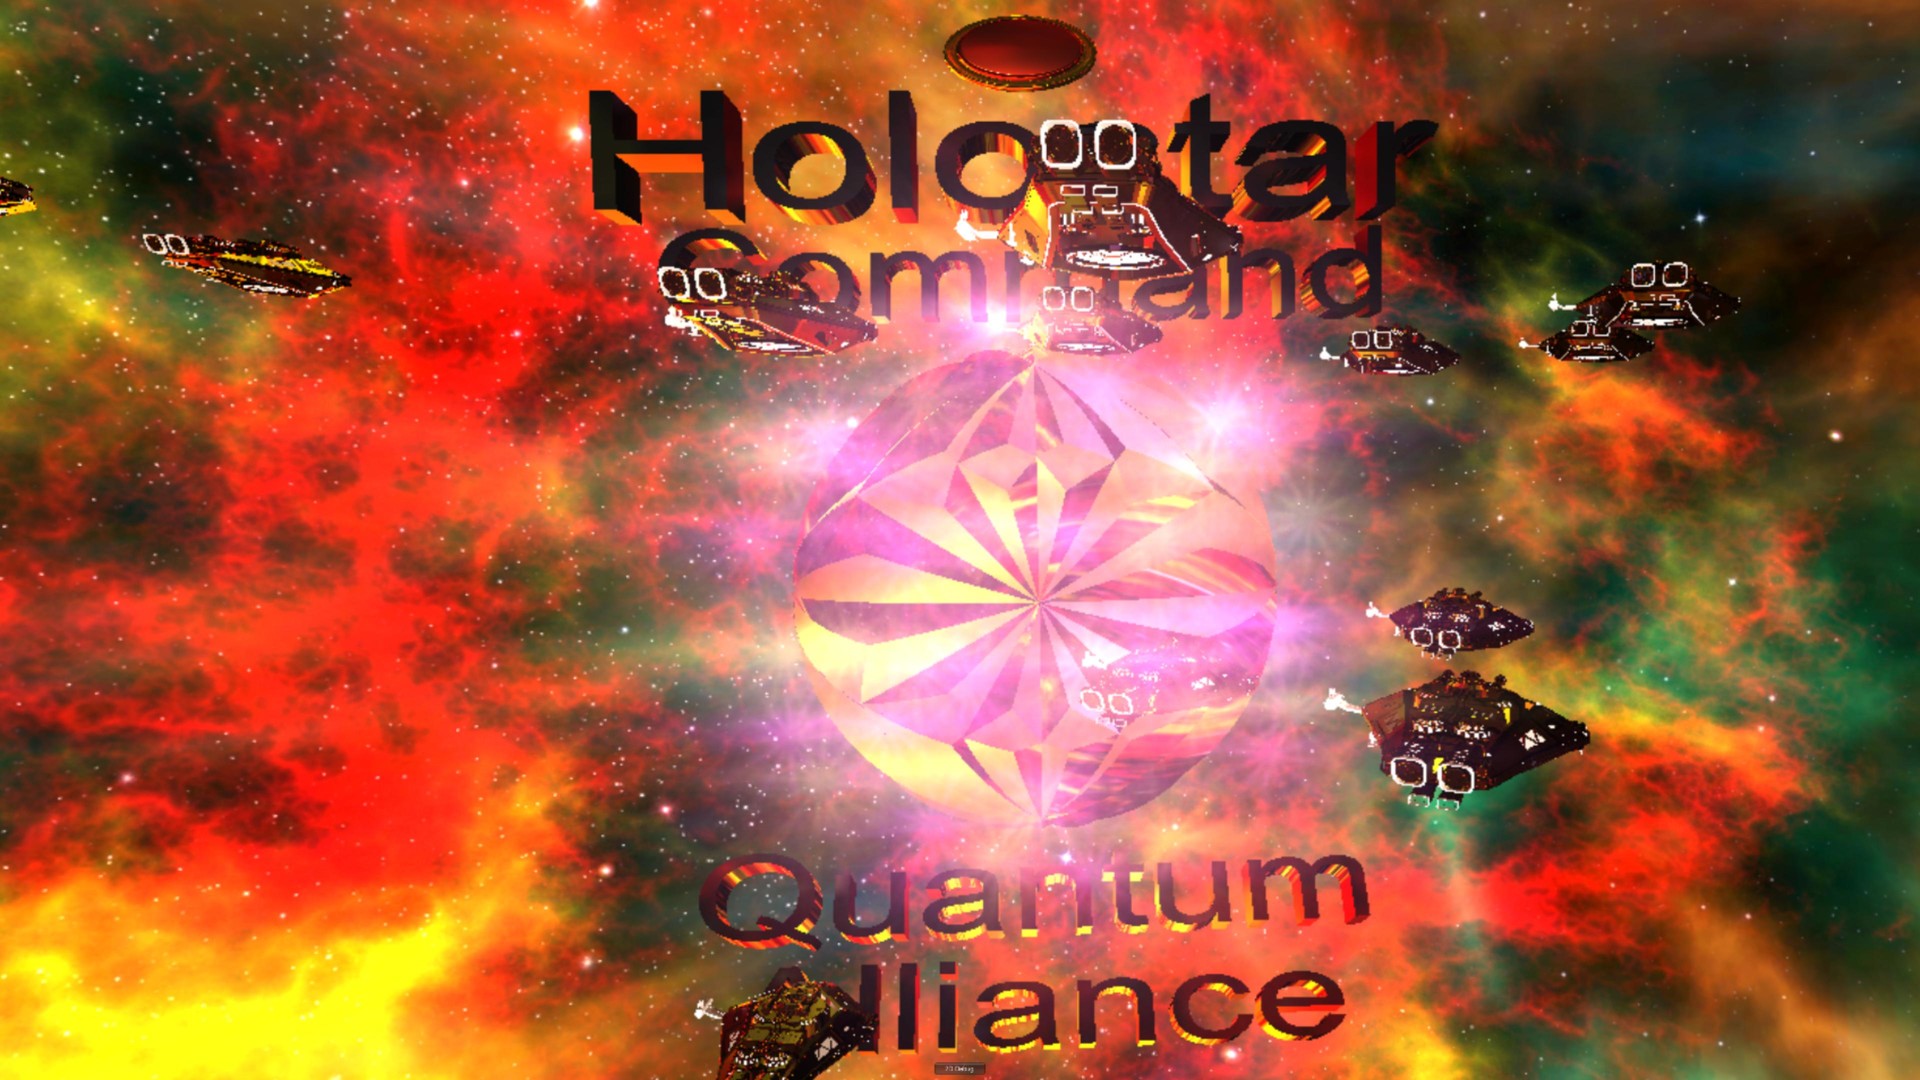 Holostar Command - Quantum Alliance Resimleri 